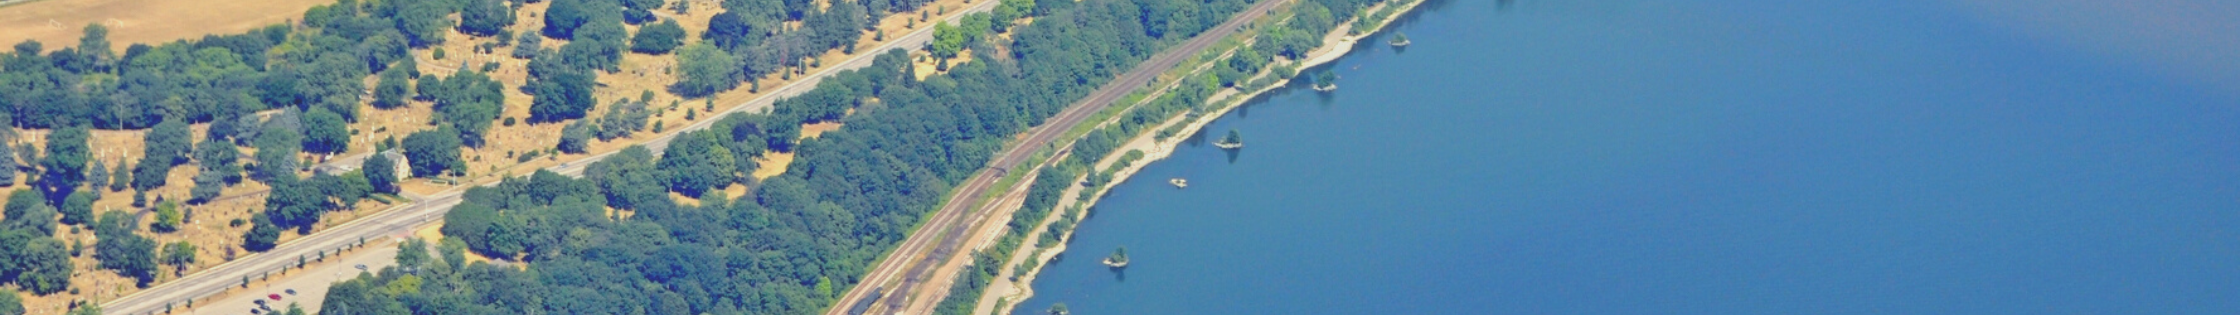 Aerial shot of lakeside